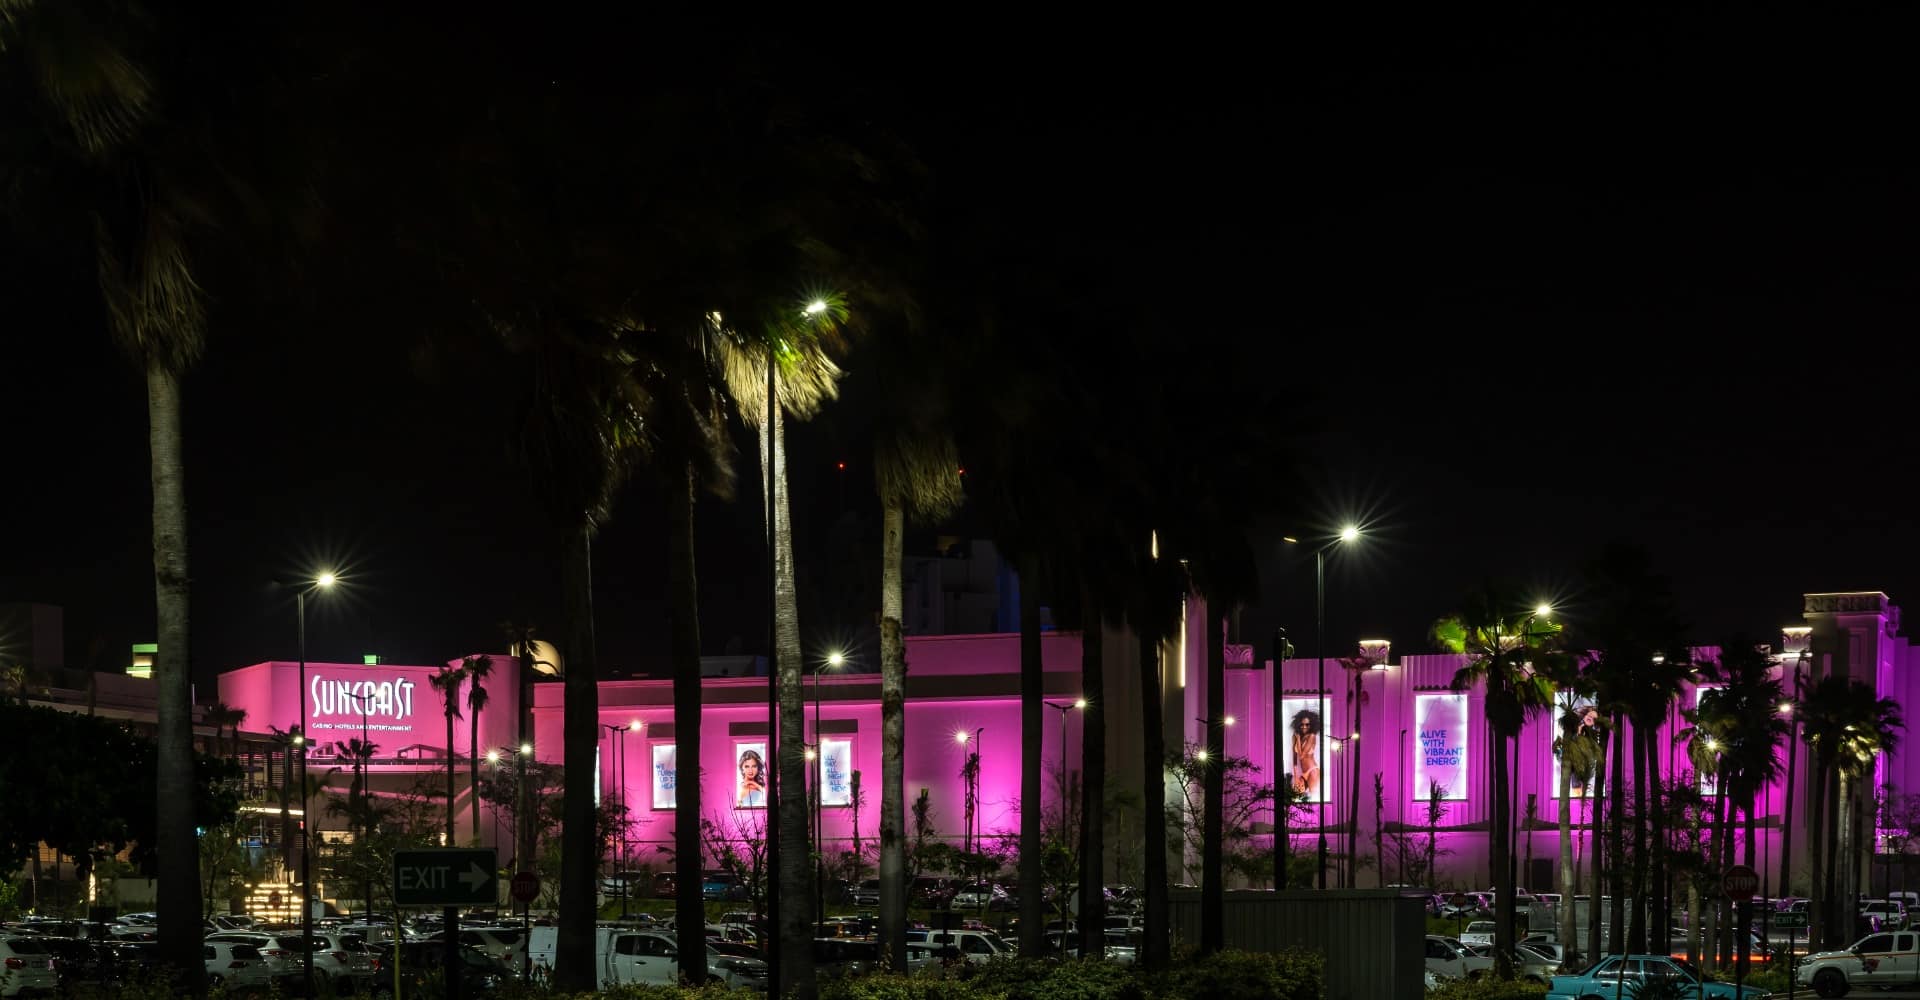 Suncoast Casino with pink exterior lighting at night